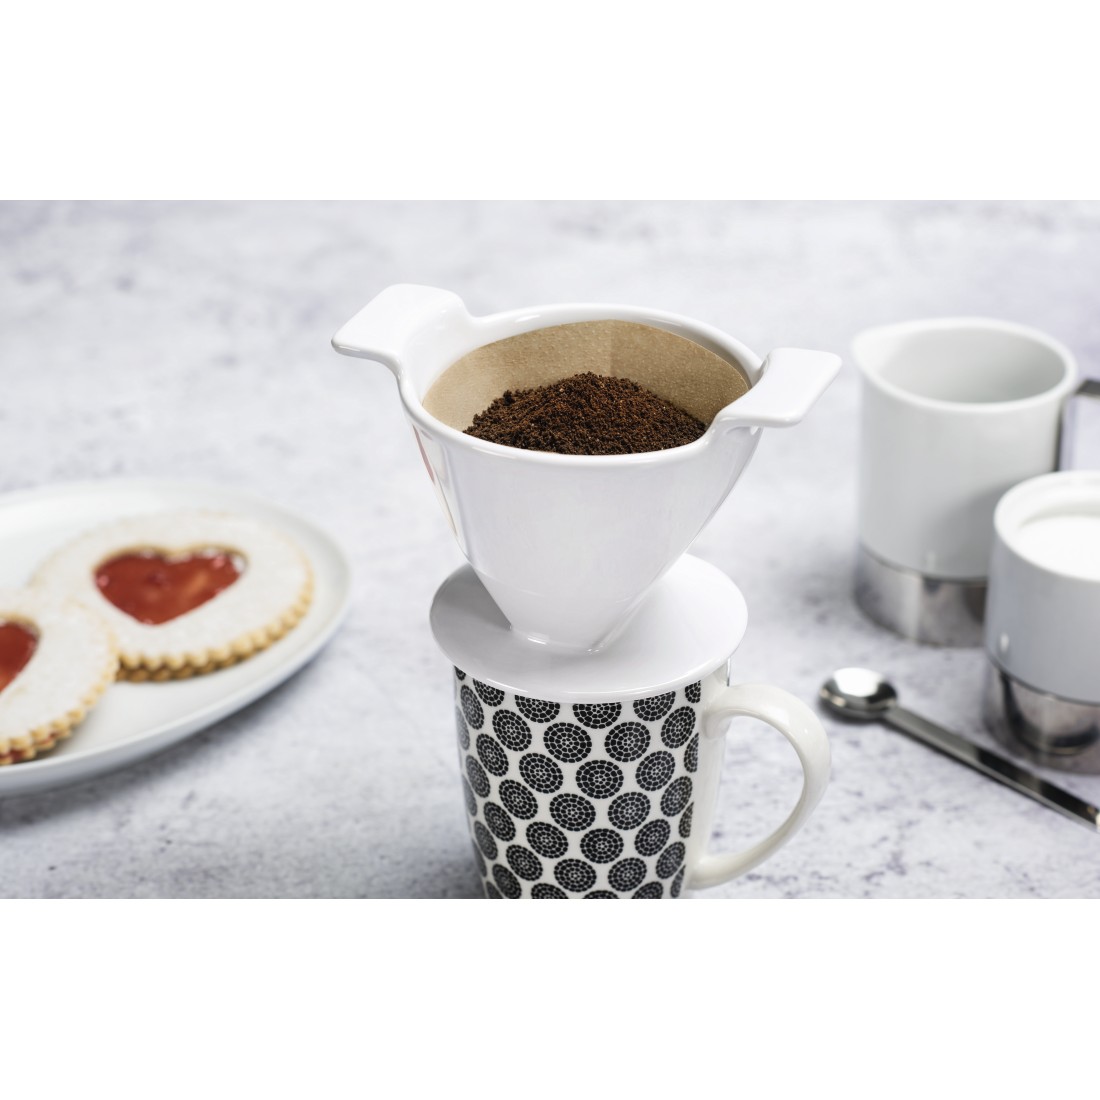 awx High-Res Appliance - Xavax, Porcelain Coffee Filter, size 2, white